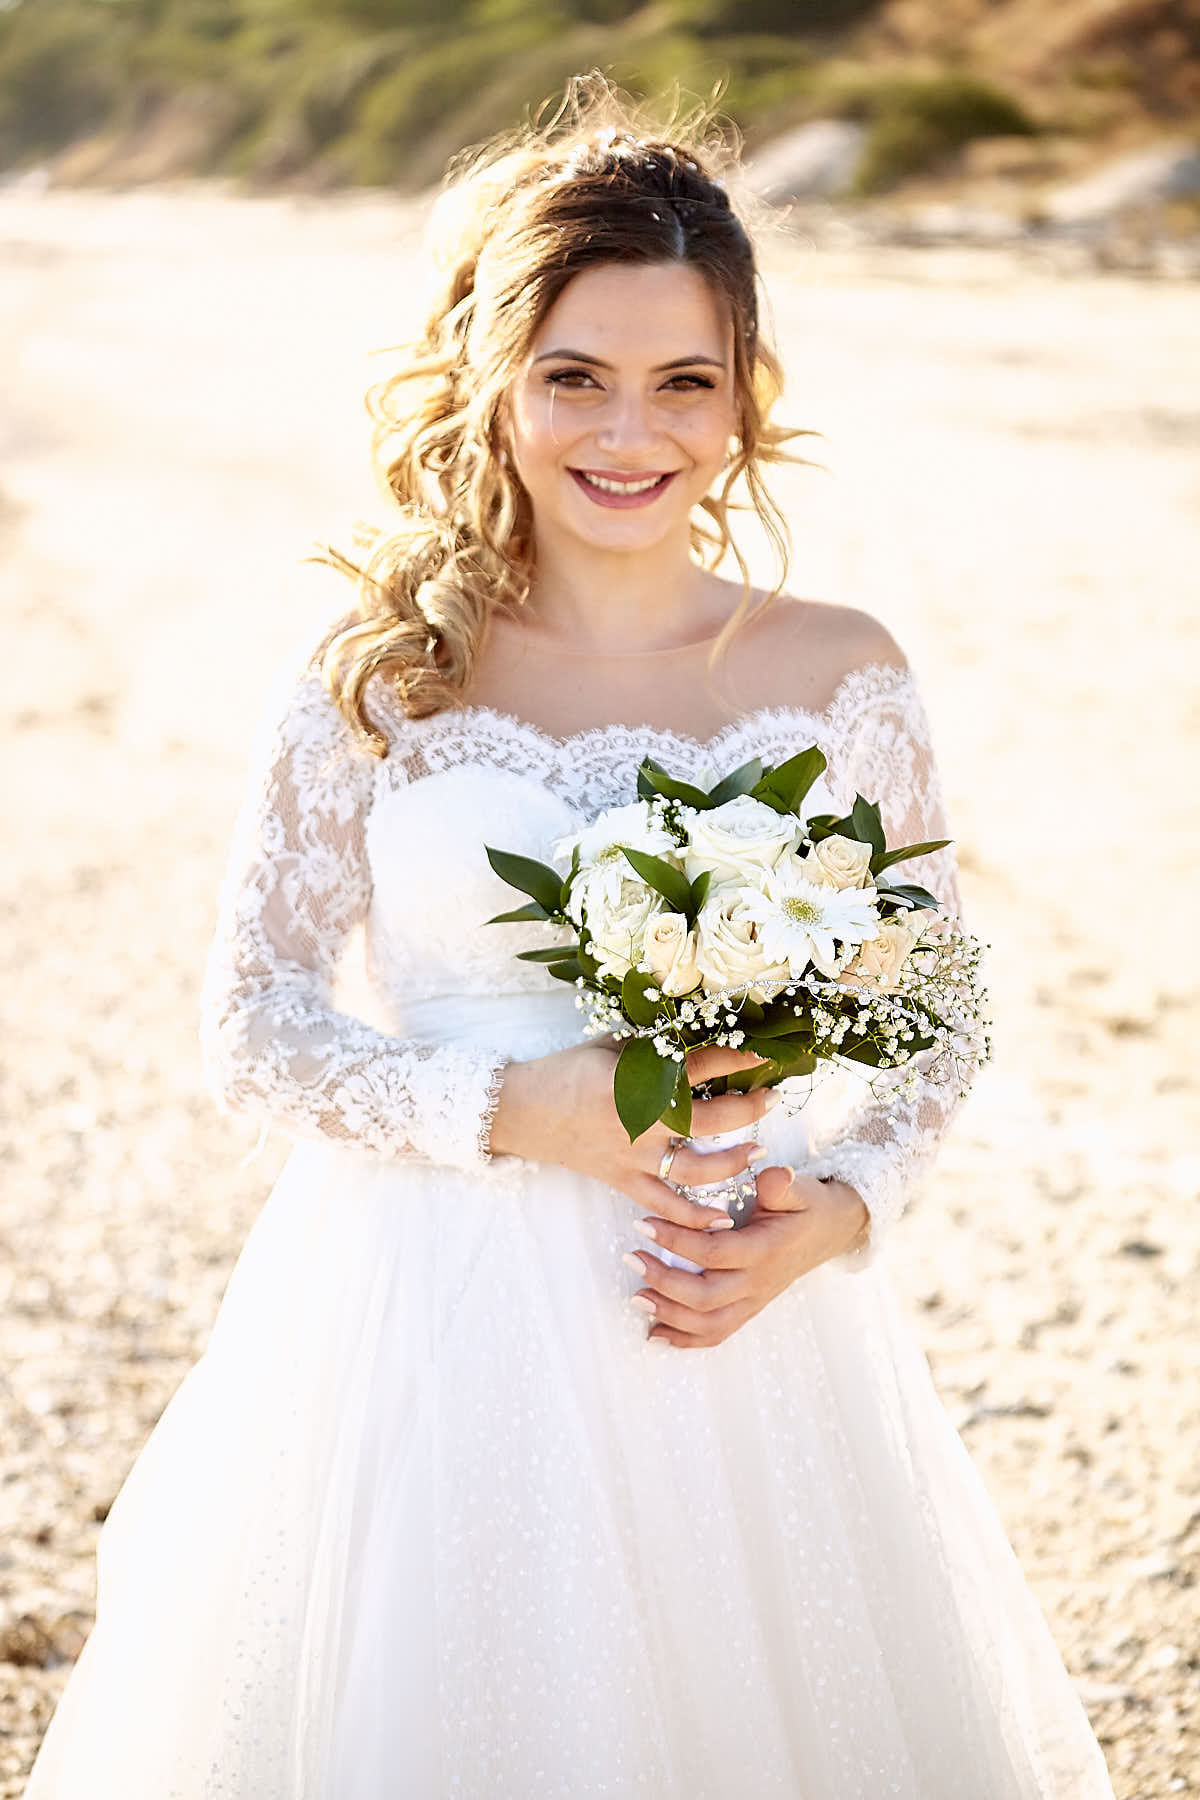 bride holding flowers, sun illuminating her hair in golden hues